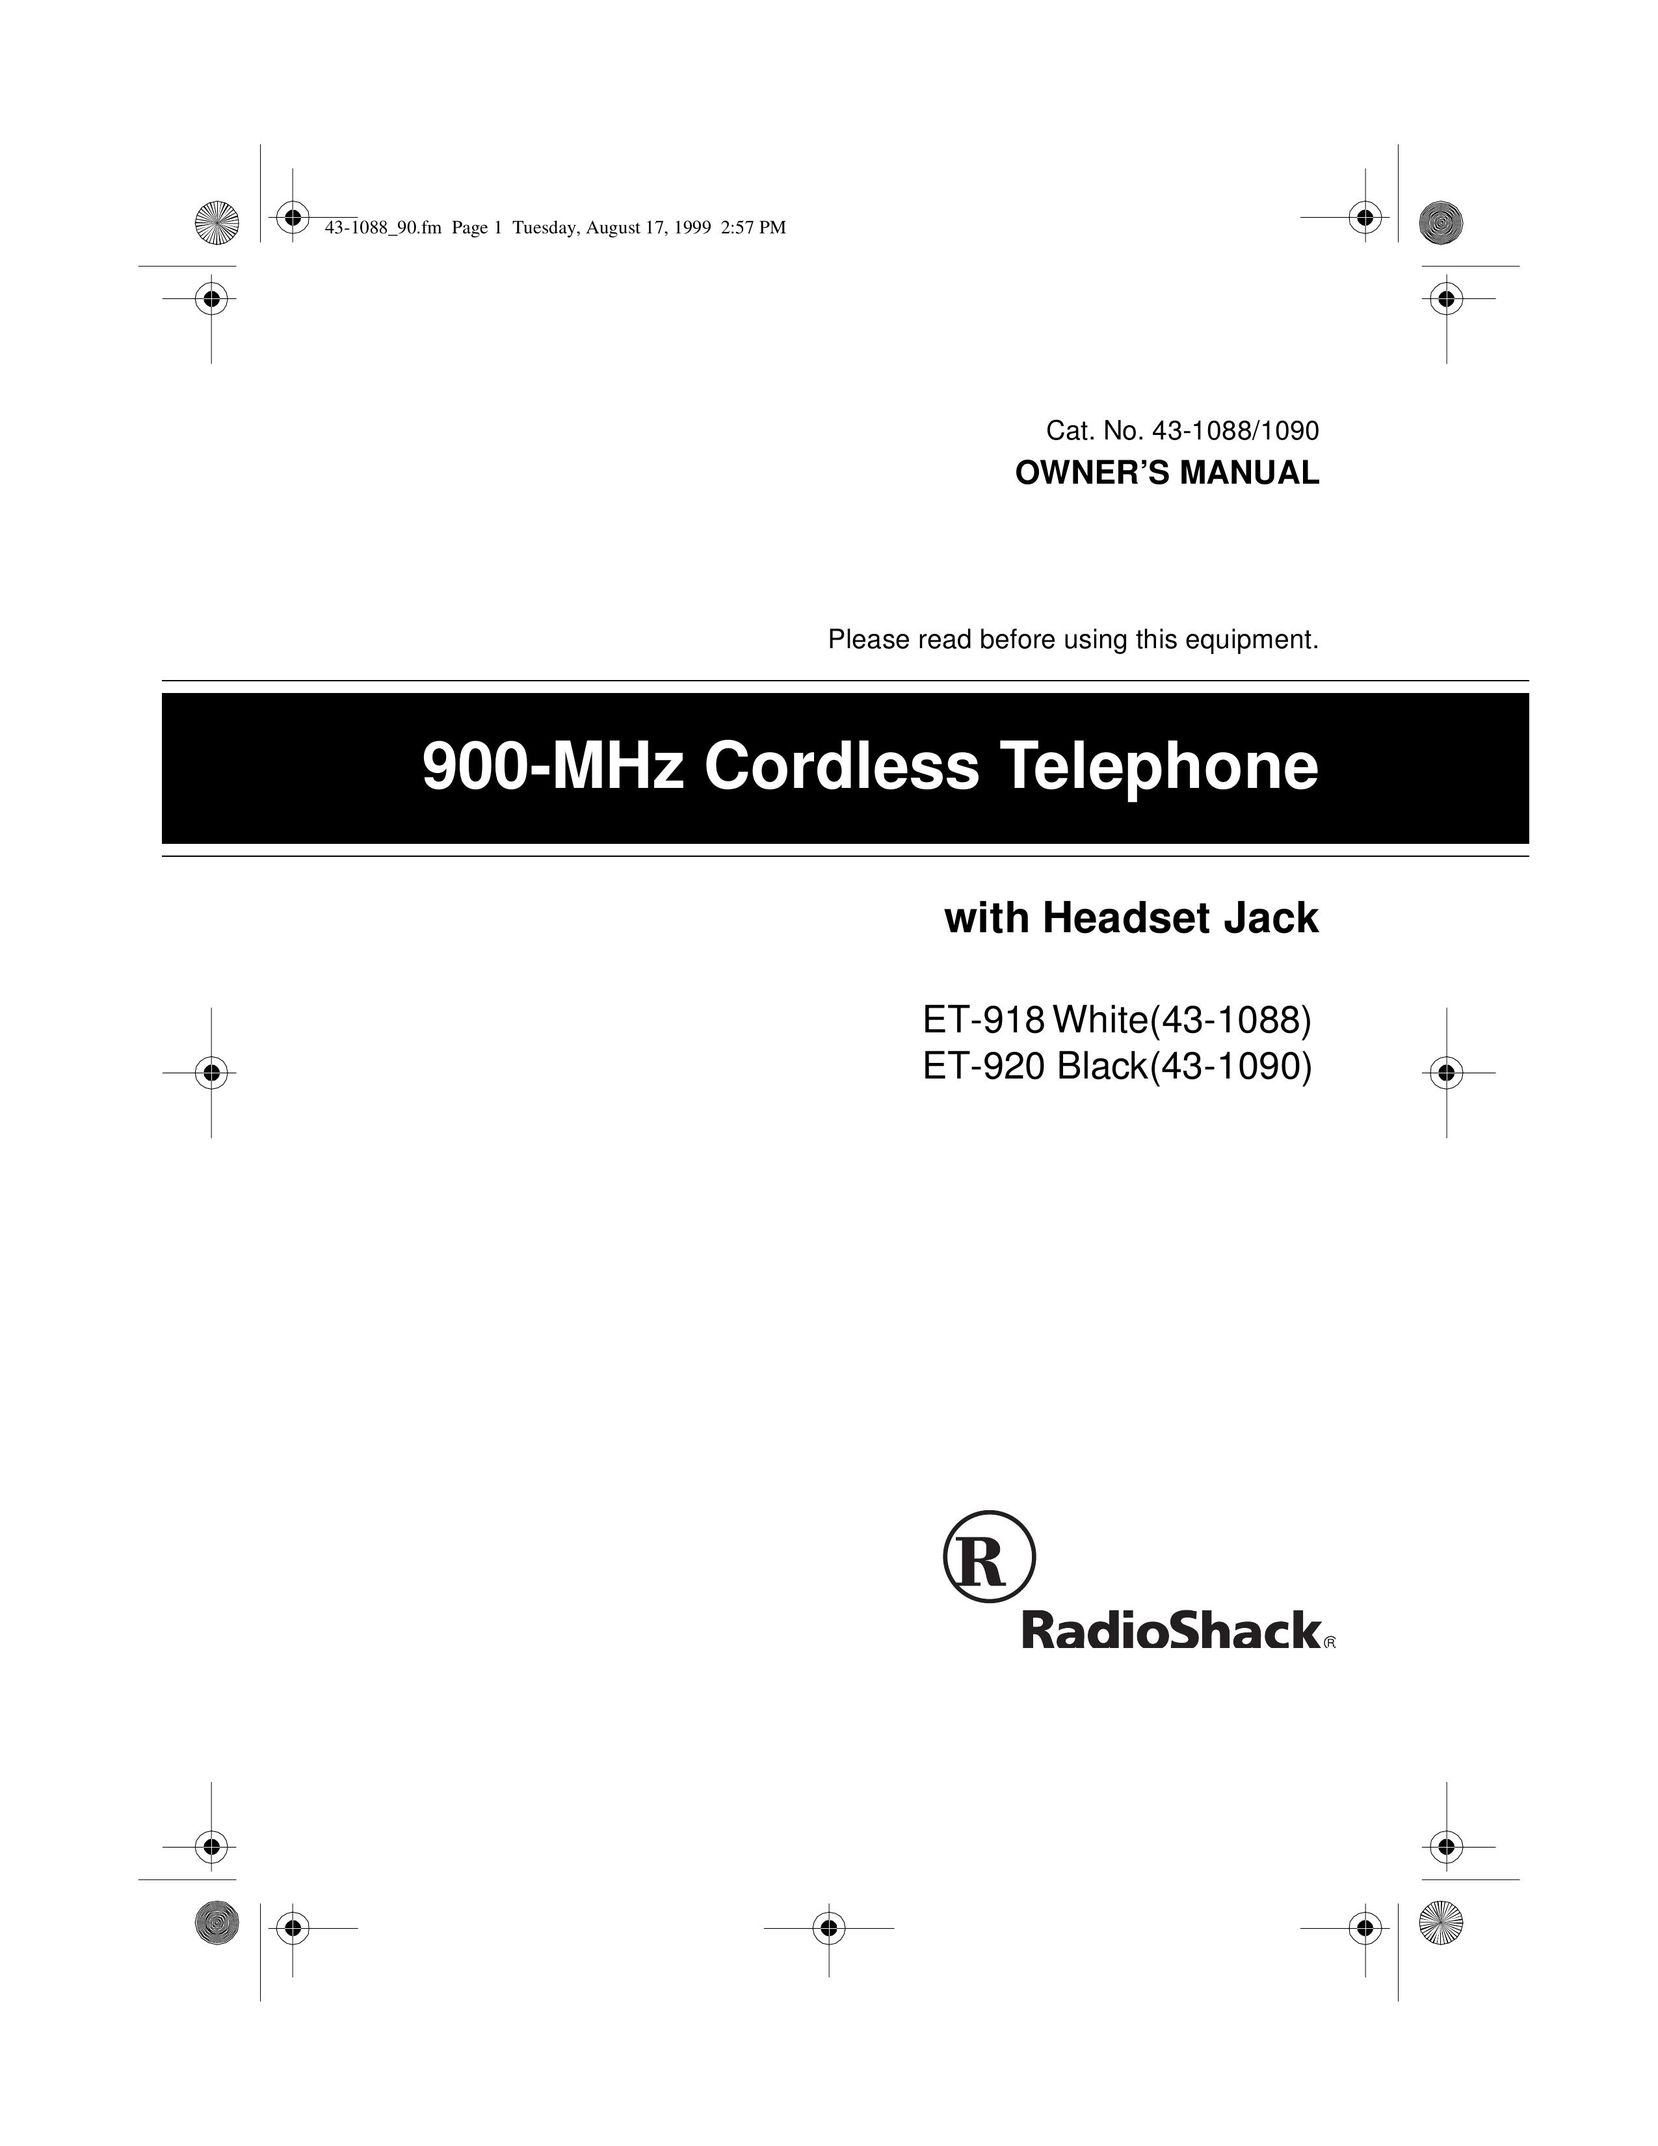 Radio Shack 43-1090 Cordless Telephone User Manual